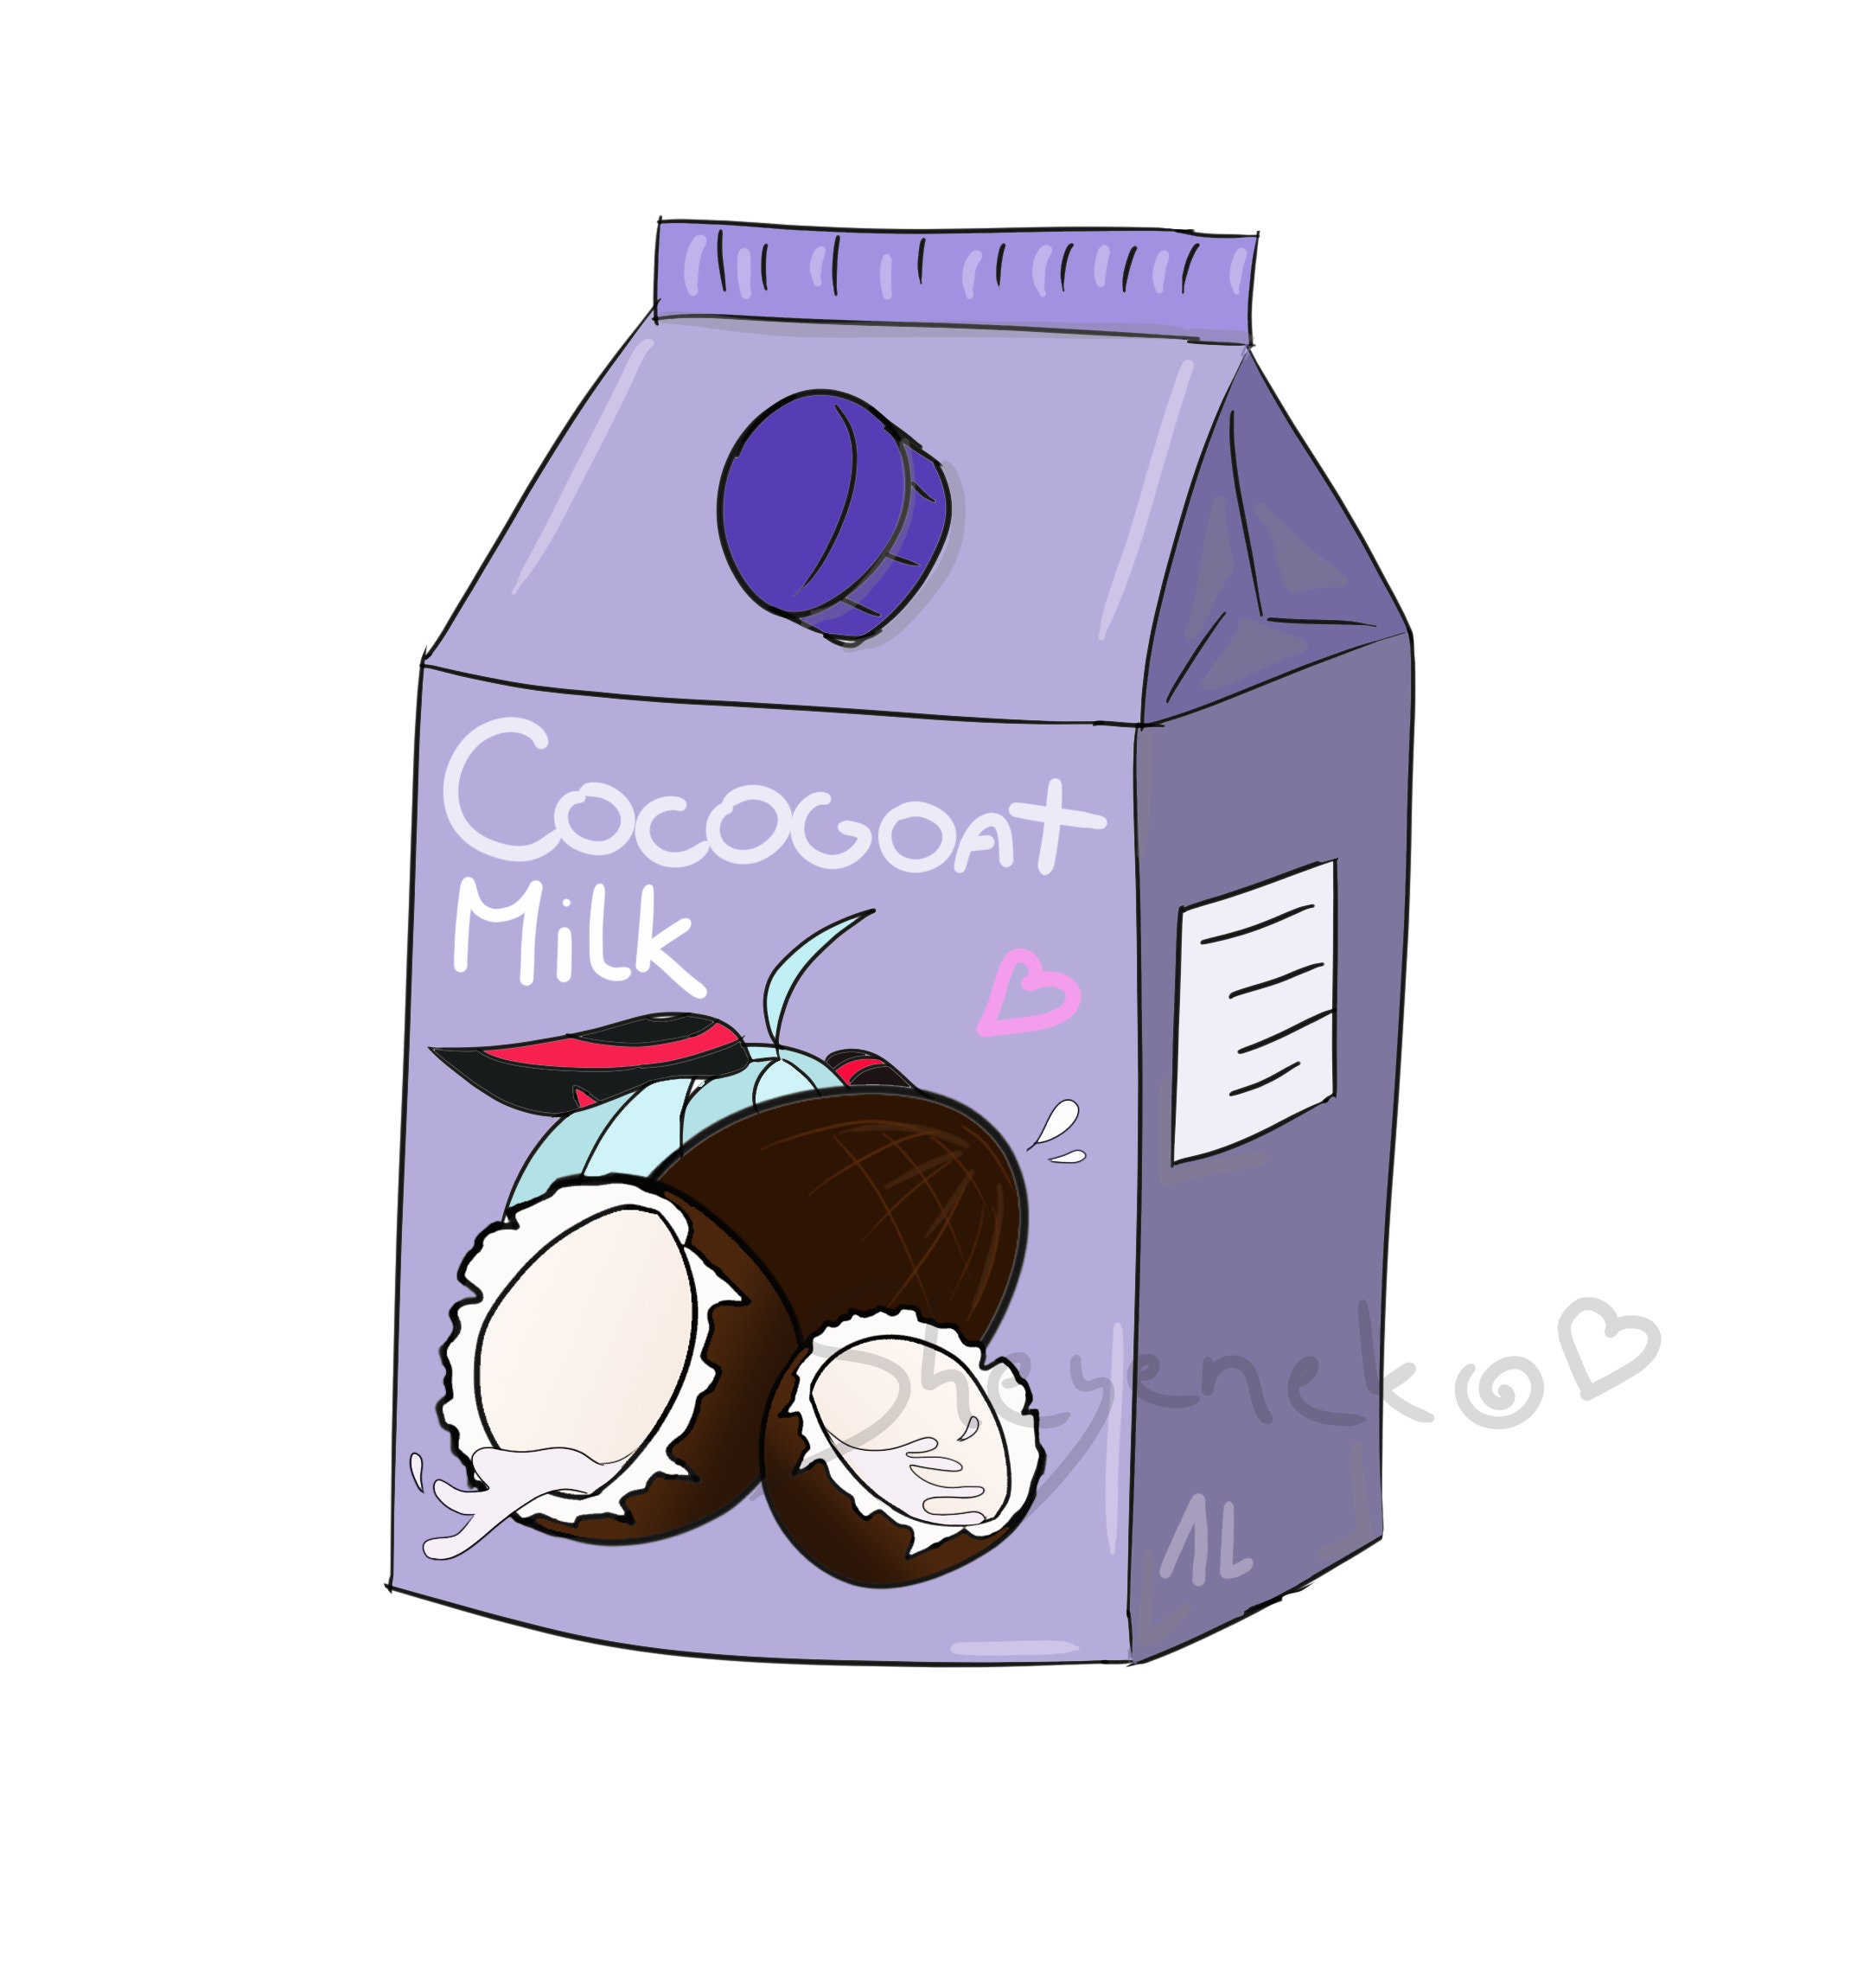 Cocogoat Milk sticker from Ganyu to Qiqi Genshin Impact | Etsy